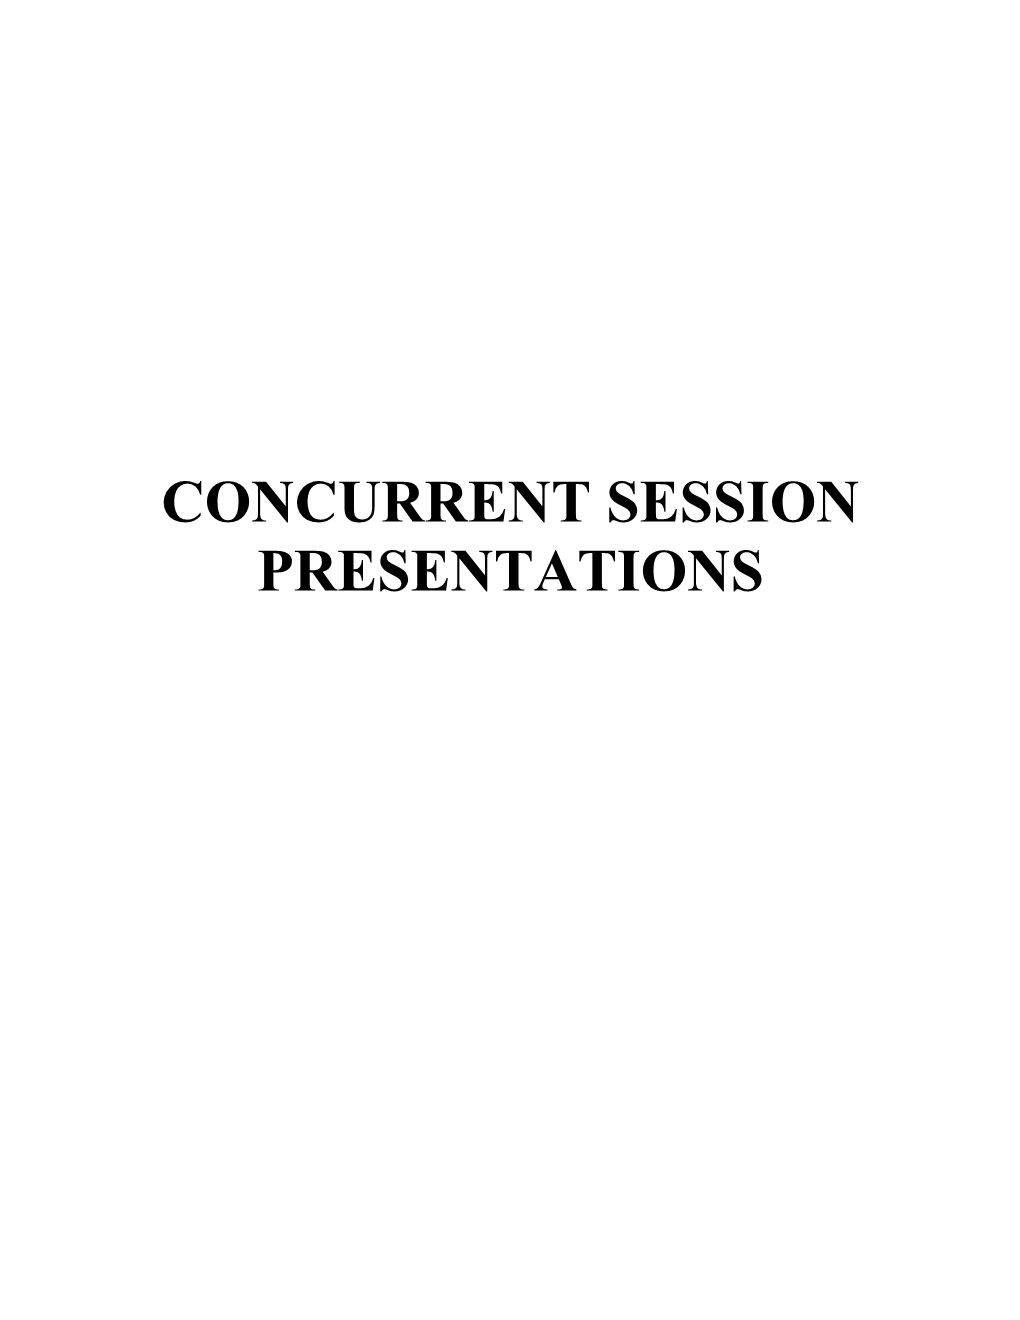 Concurrent Session Presentations (Pdf)